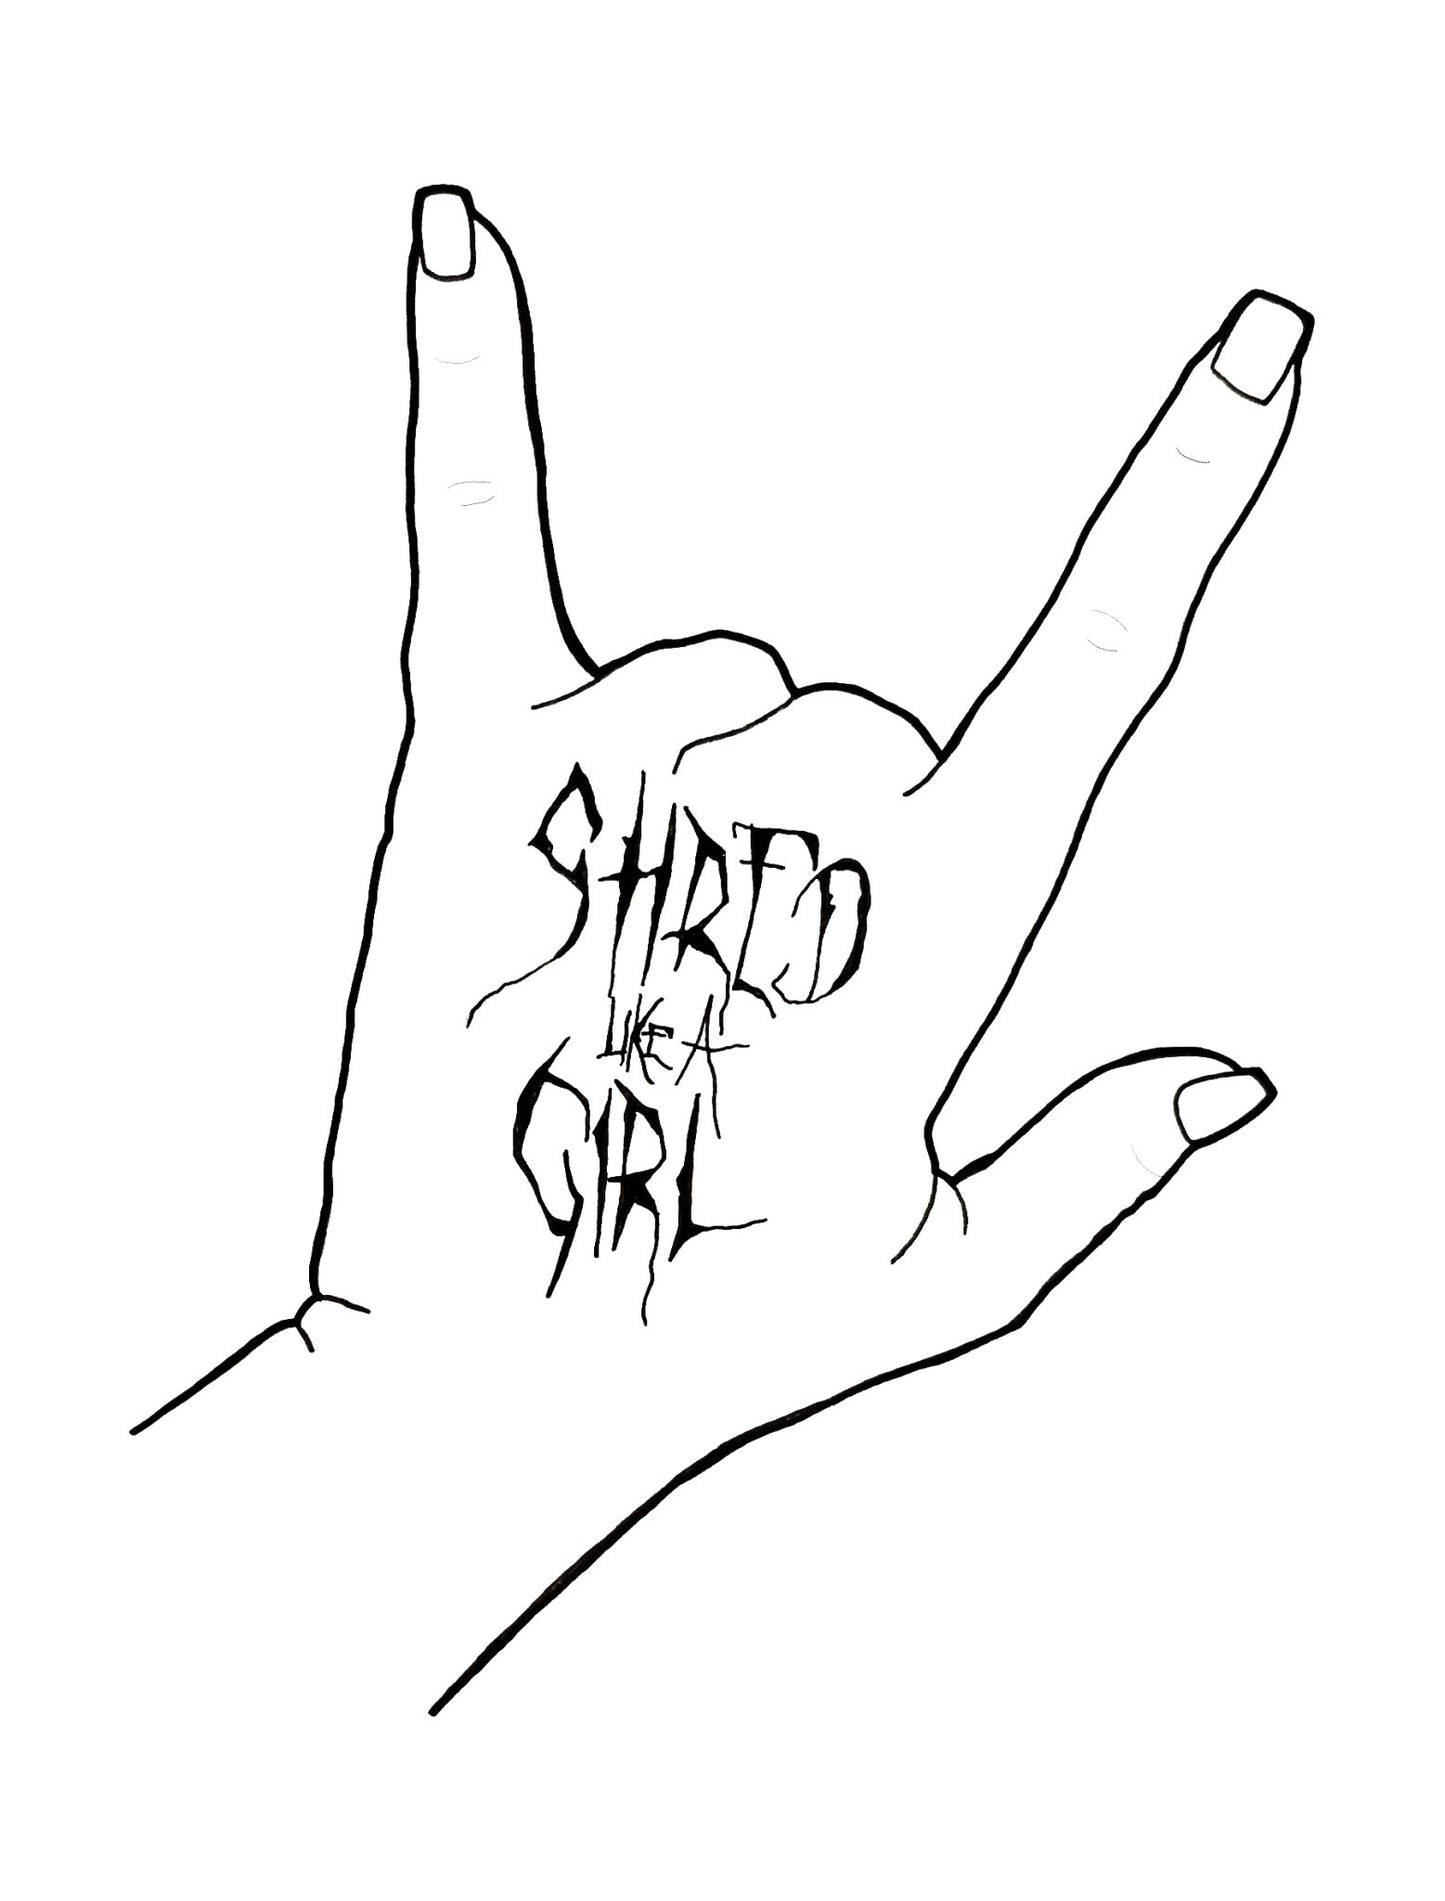 Throw Horns Sticker - Shred Like a Girl